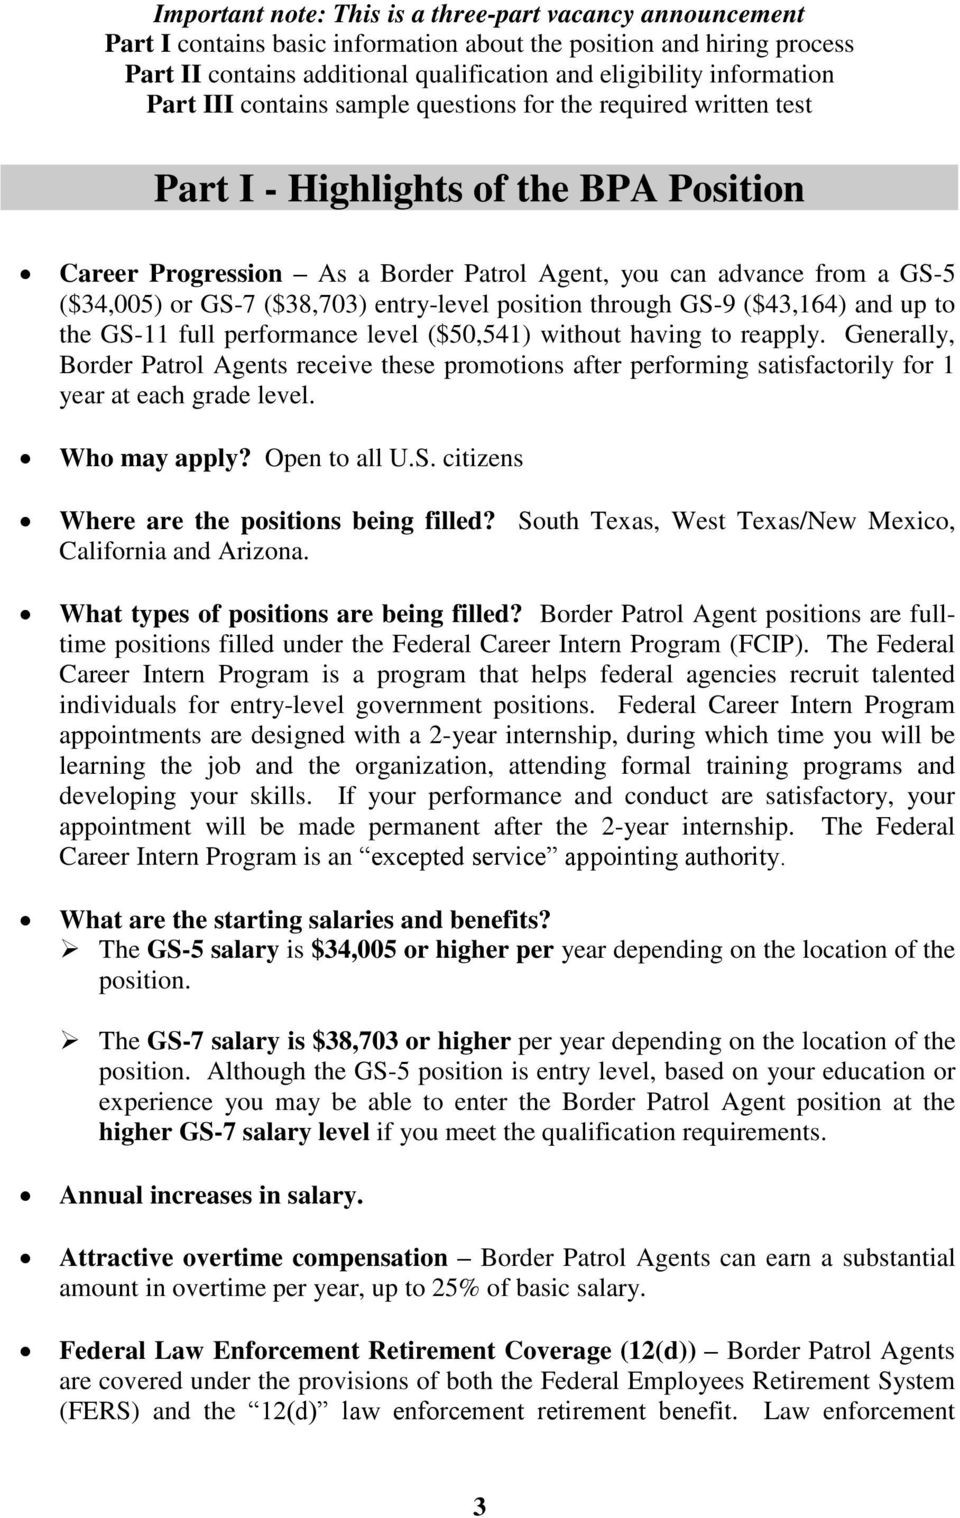 Sample Resume for Border Patrol Agent Position: Border Patrol Agent (bpa) – Pdf Free Download